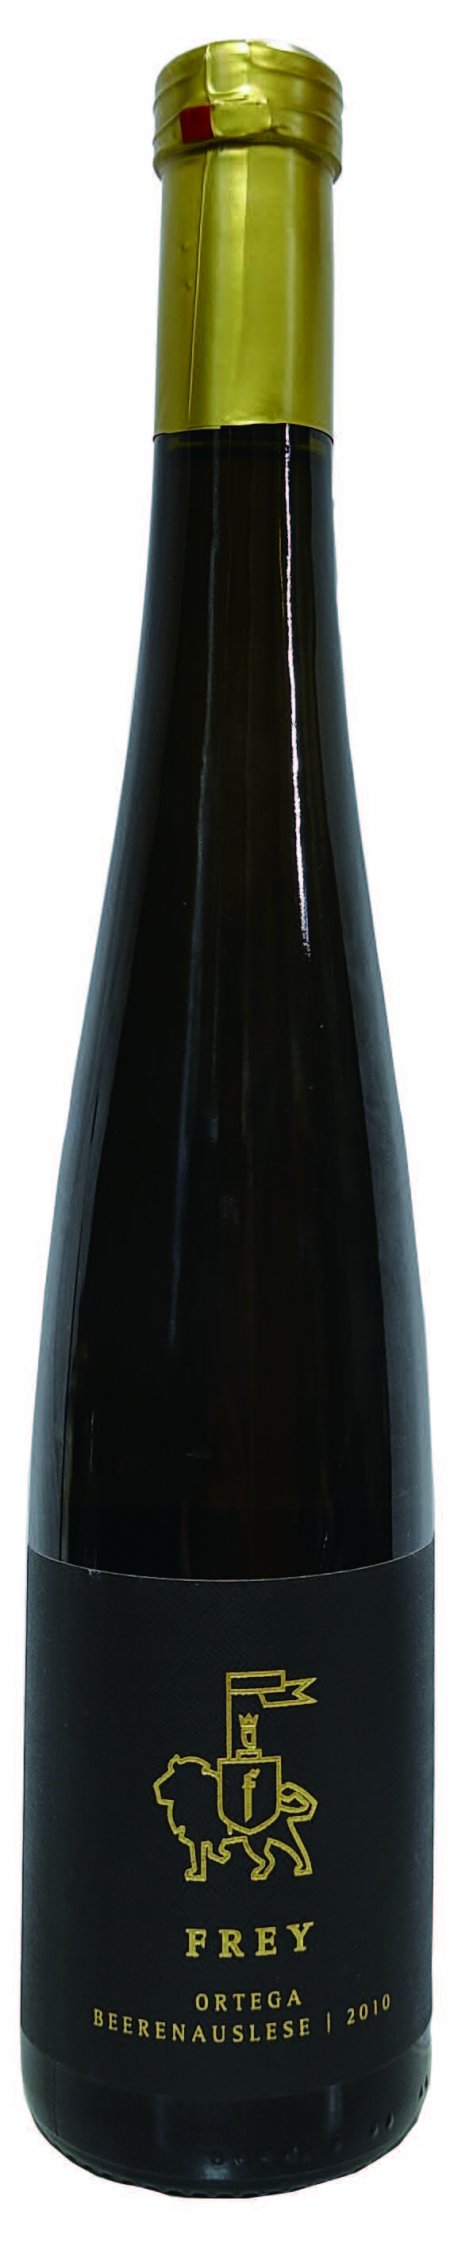 2010 Weingut Frey Black Gold Edition Beerenauslese